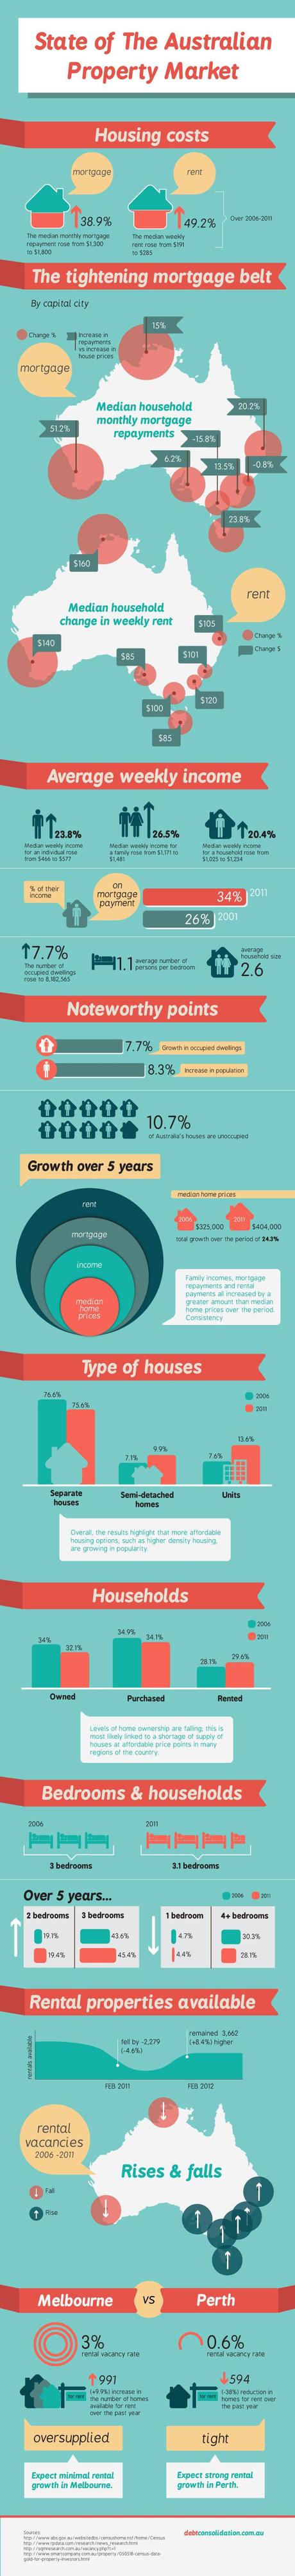 Infographic on the Australian Property Market